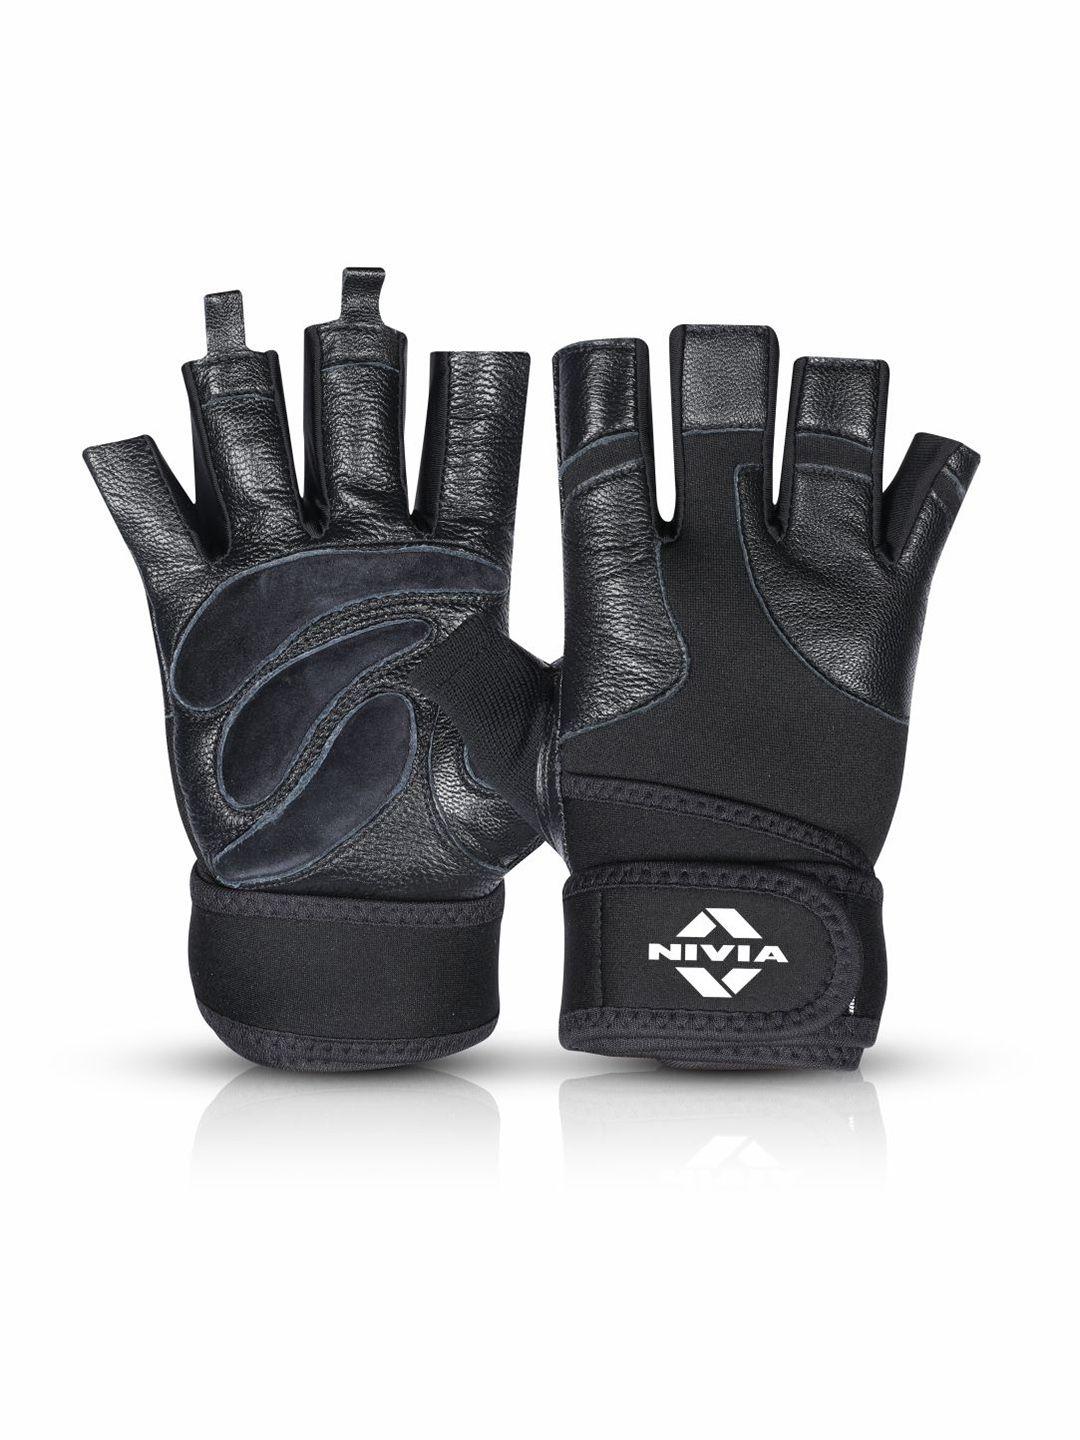 nivia wrist grip genuine leather gym gloves